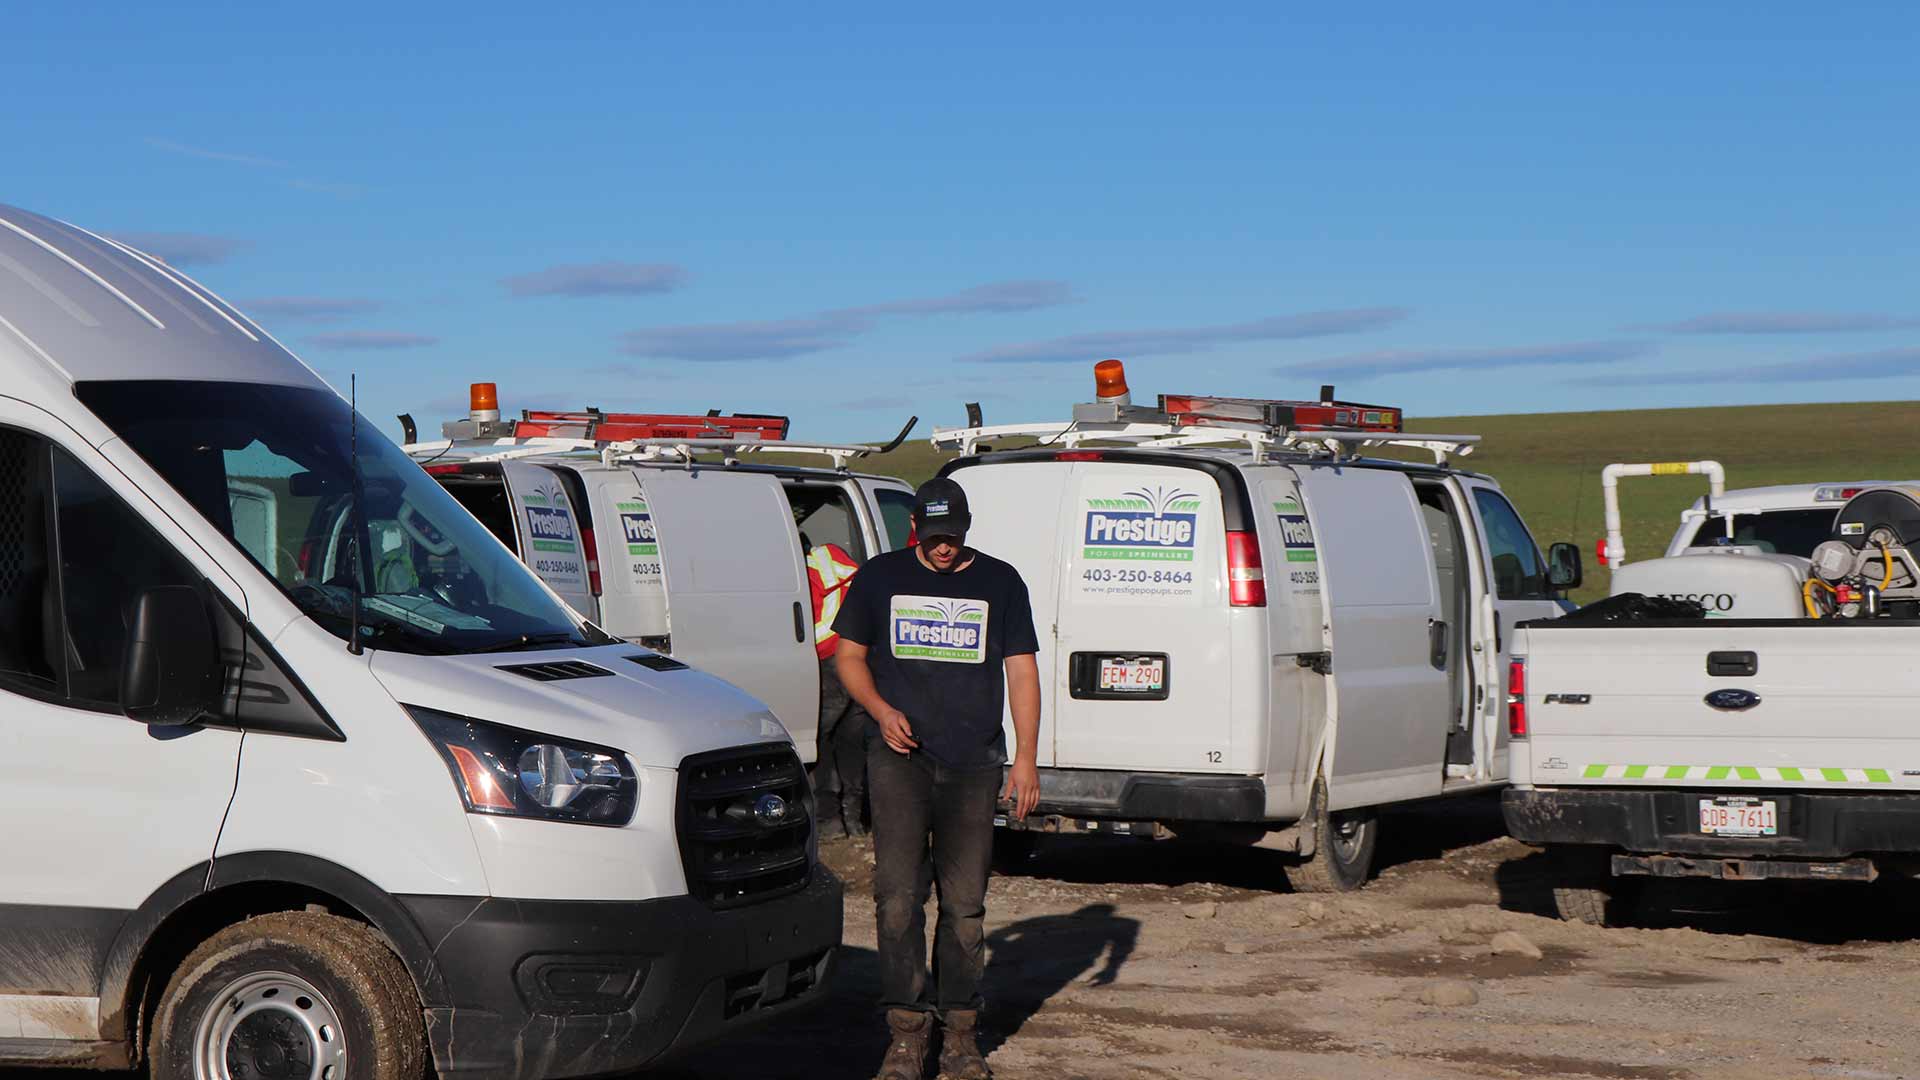 Prestige Outdoor Services work trucks displayed in Calgary, AB.